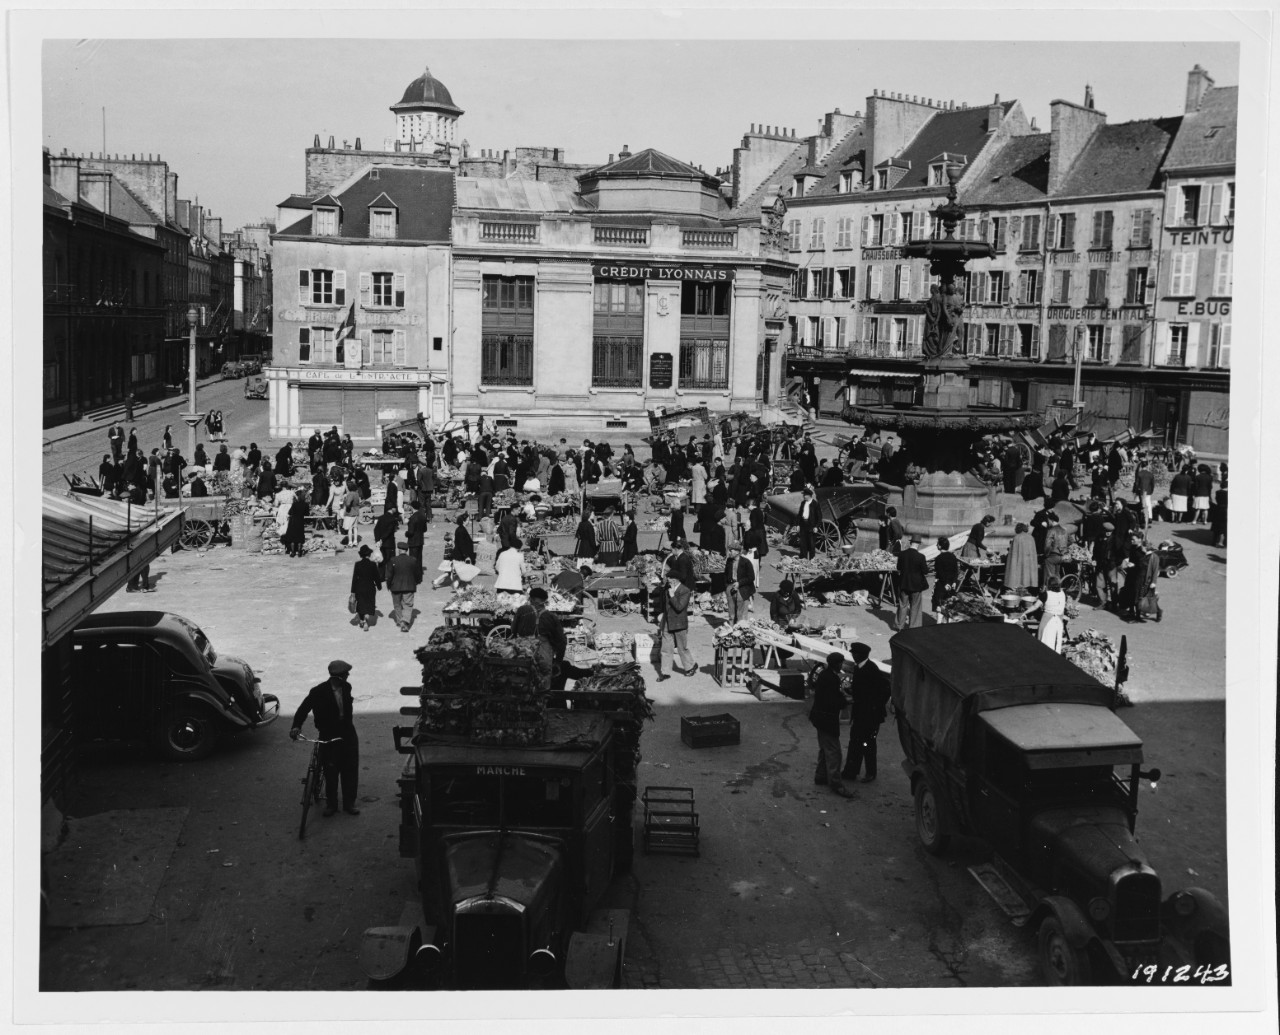 Photo #: SC 191243  Cherbourg, France